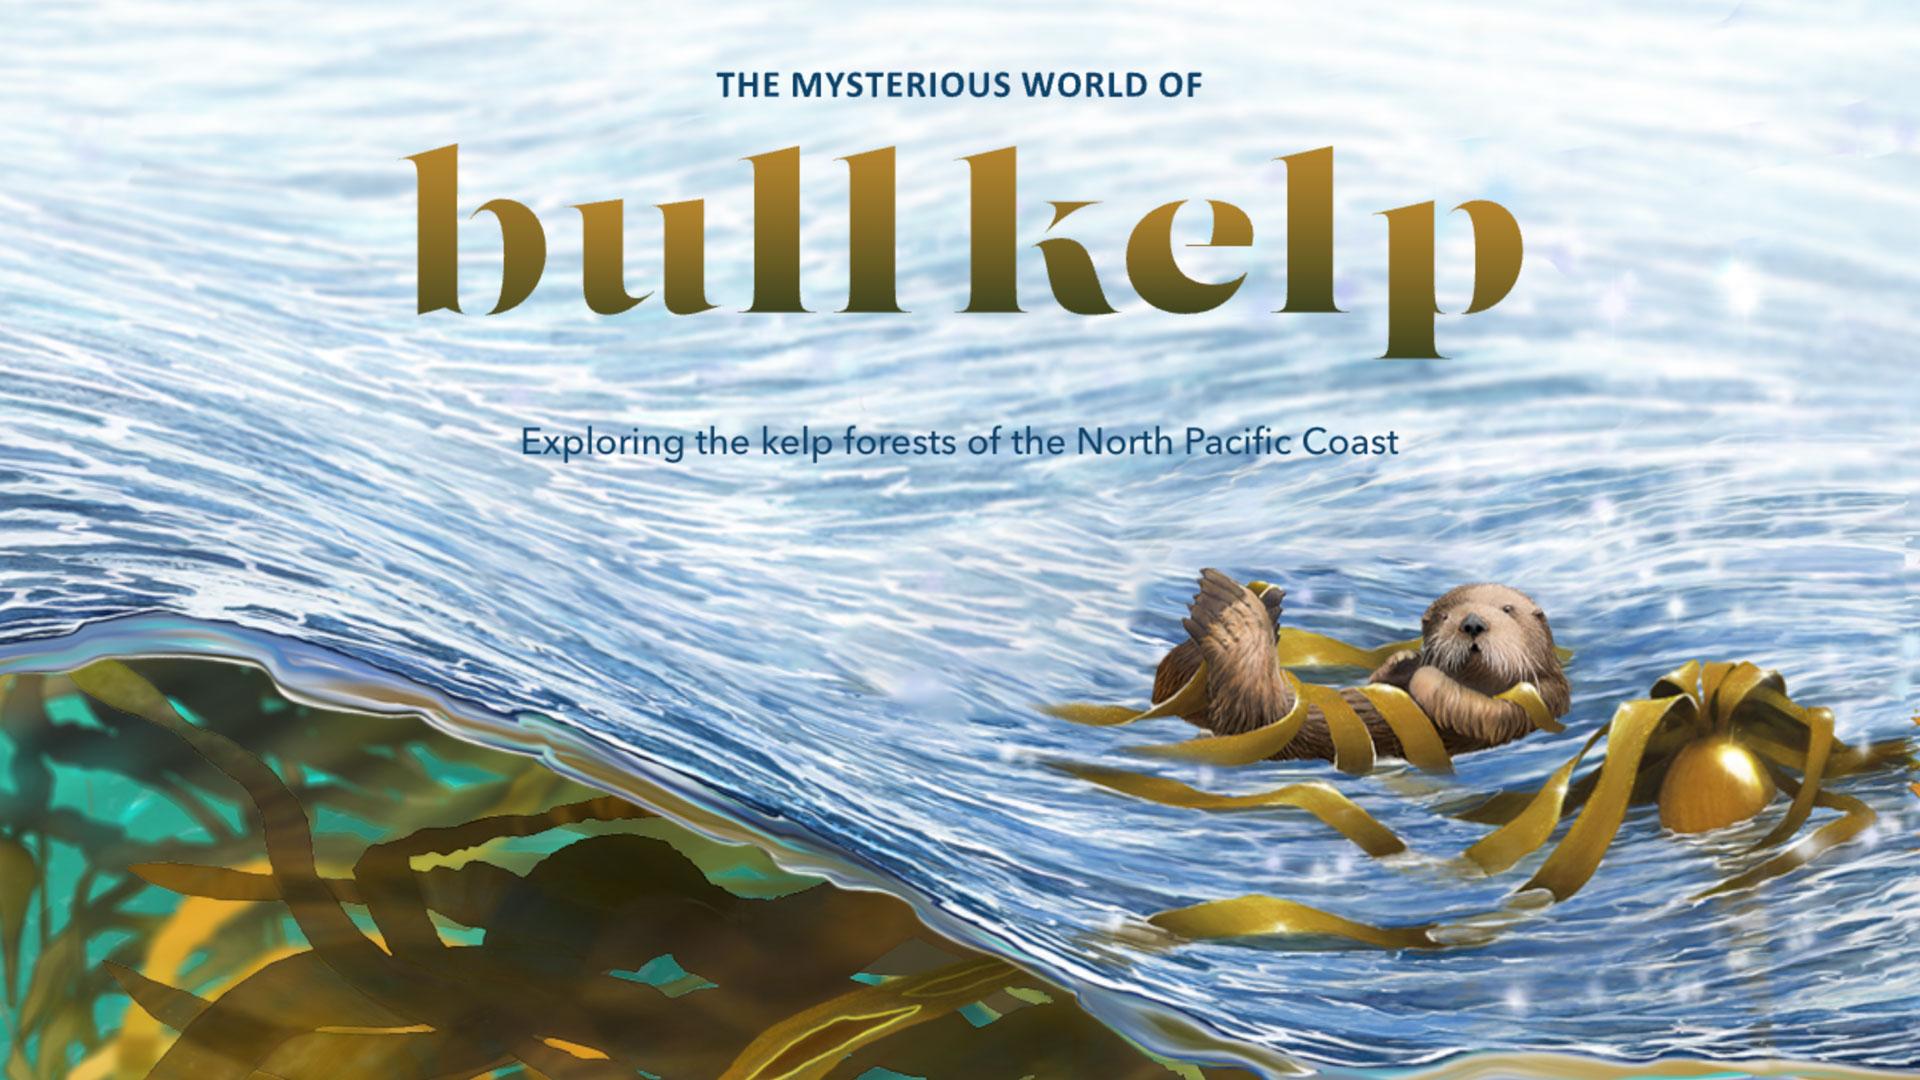 Illustration of ocean surface with otter floating among bull kelp.